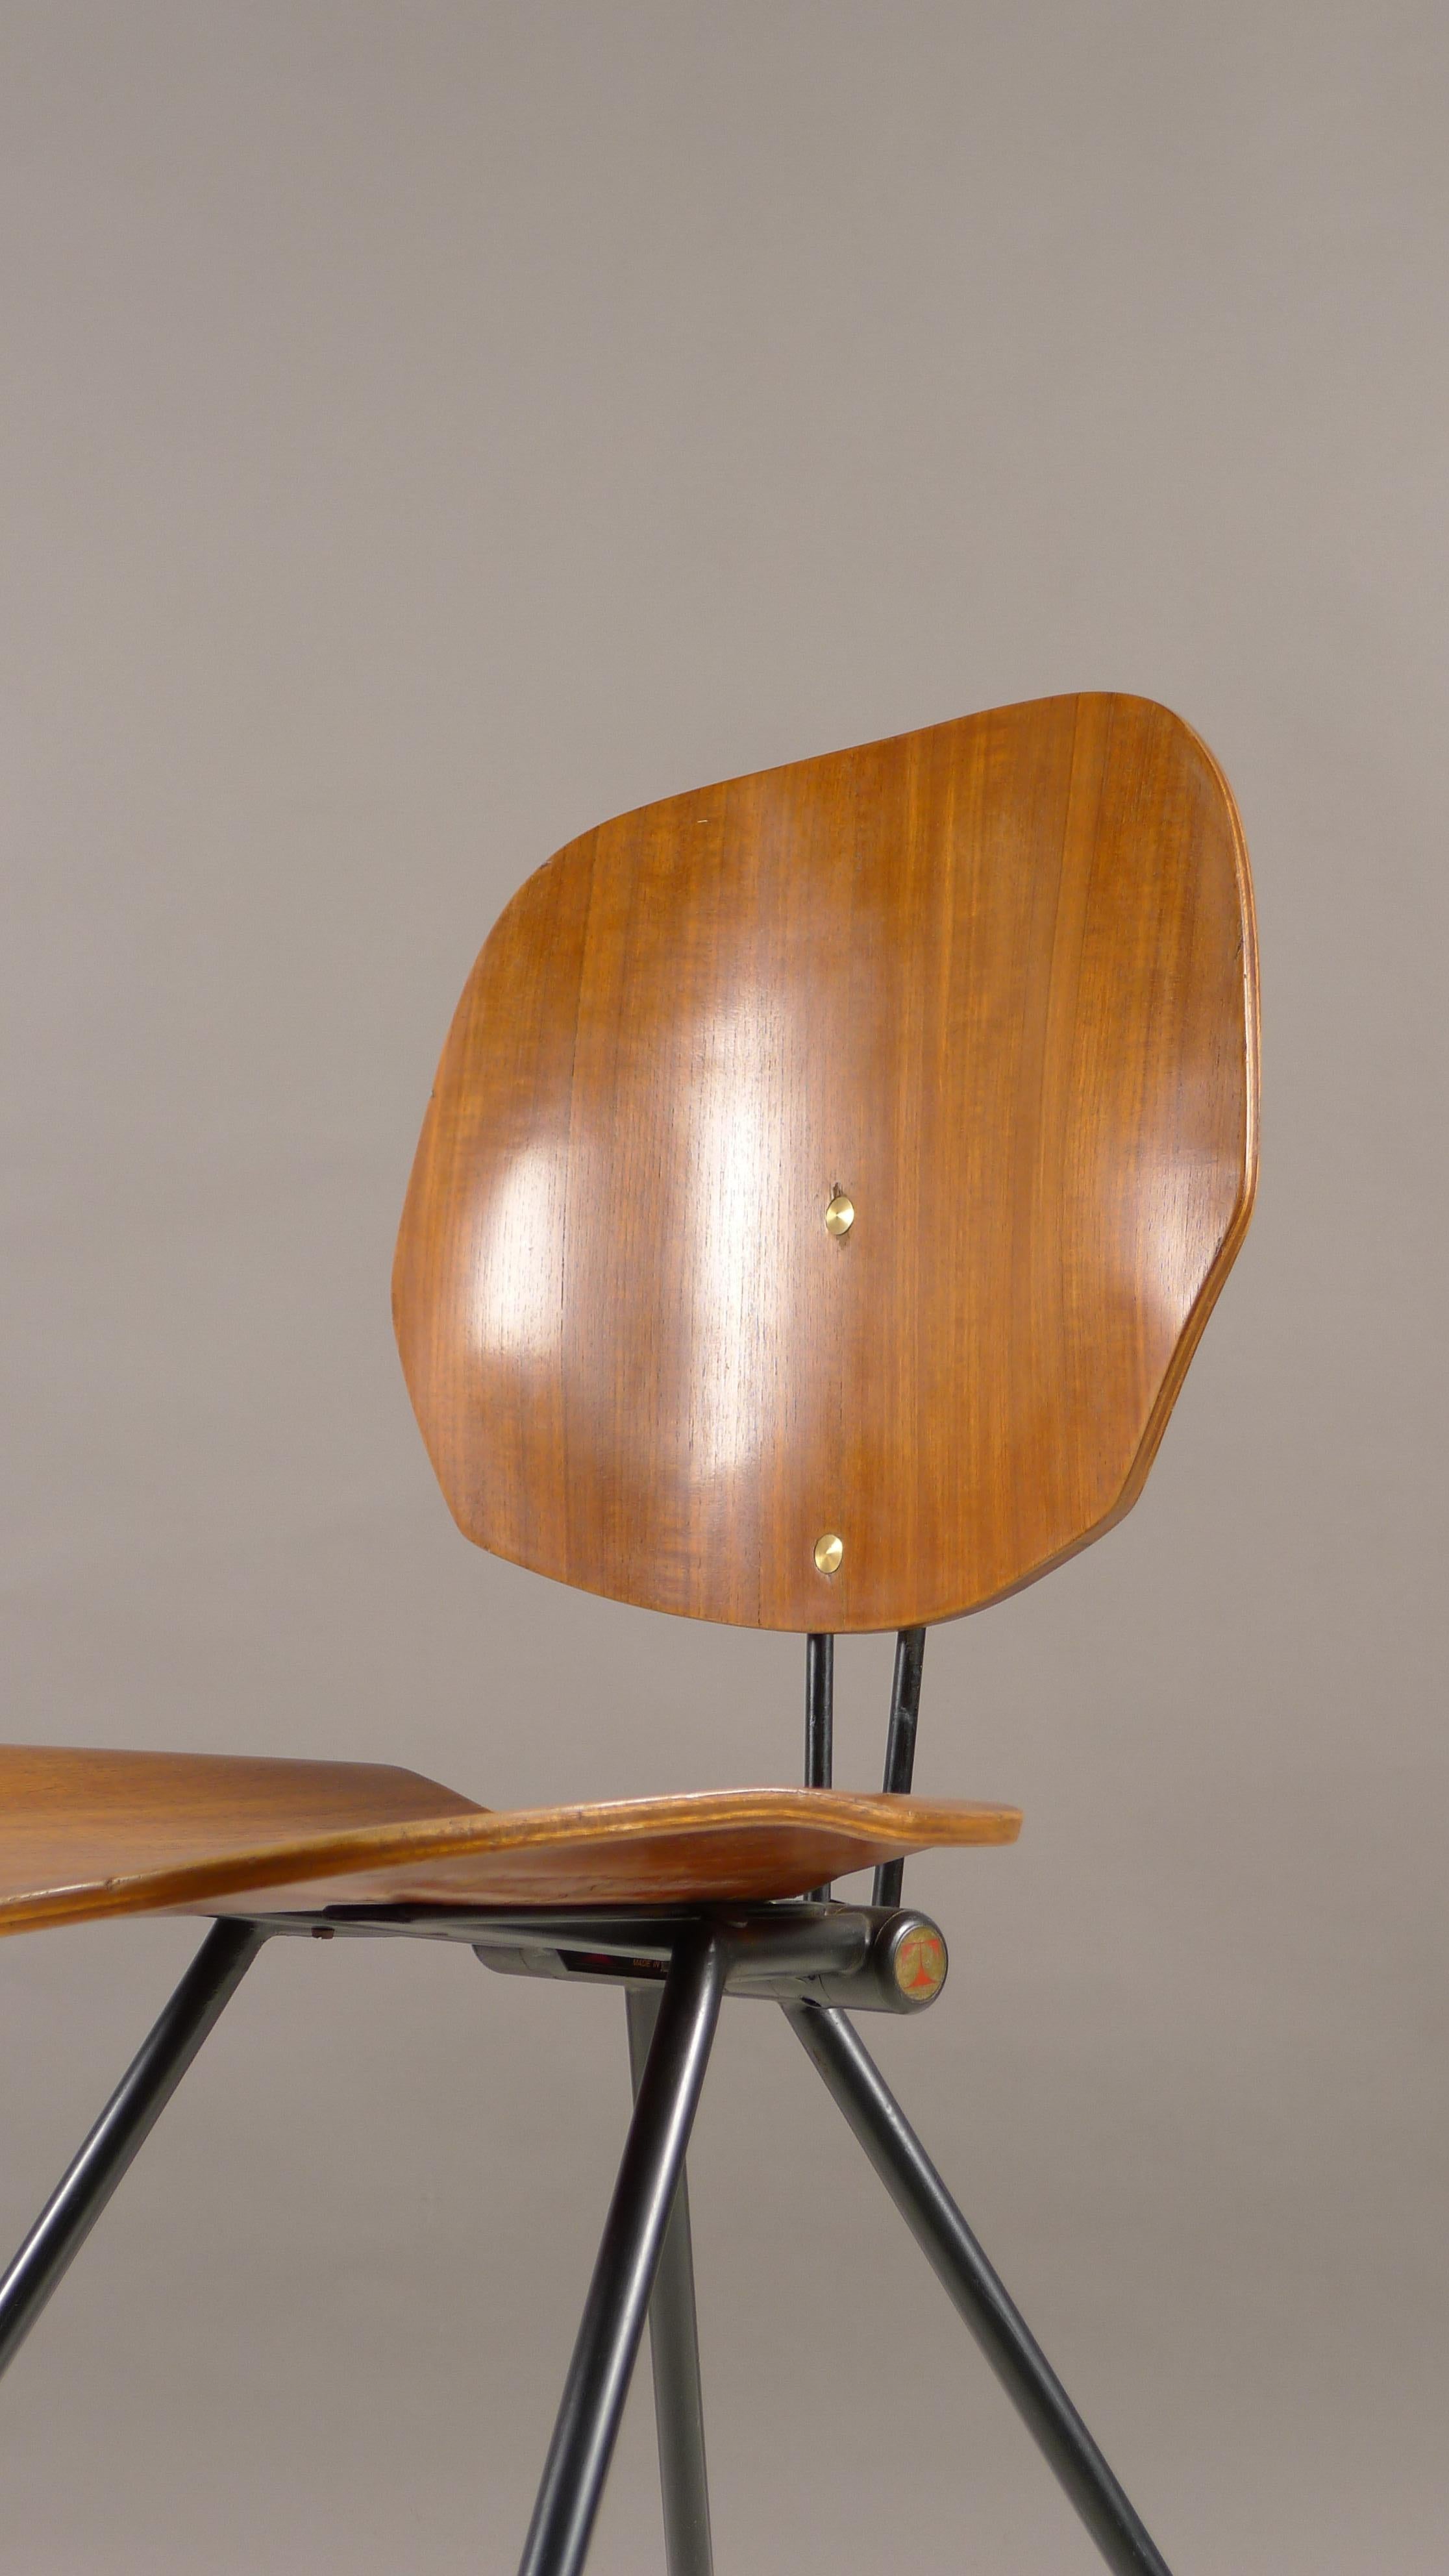 Mid-20th Century Osvaldo Borsani for Tecno, Italy, S88 Folding Chair, Labelled by Maker, 1950